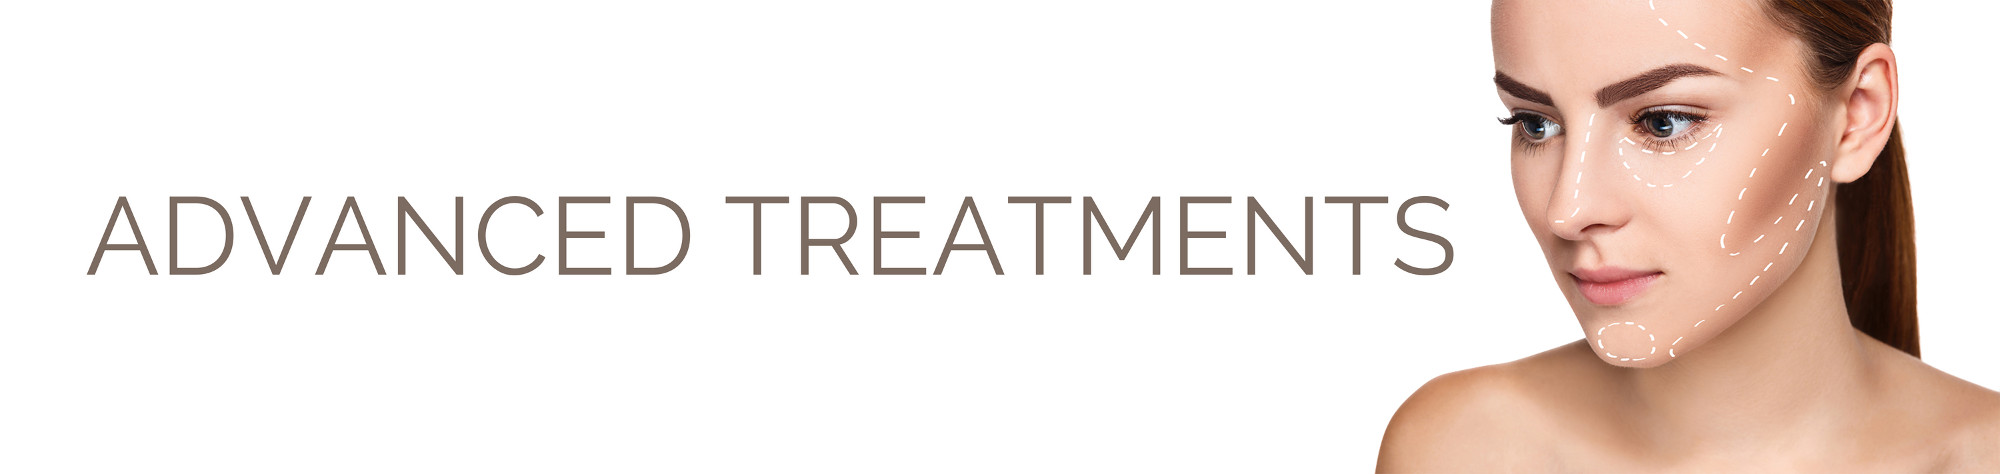 Treatment Header Image